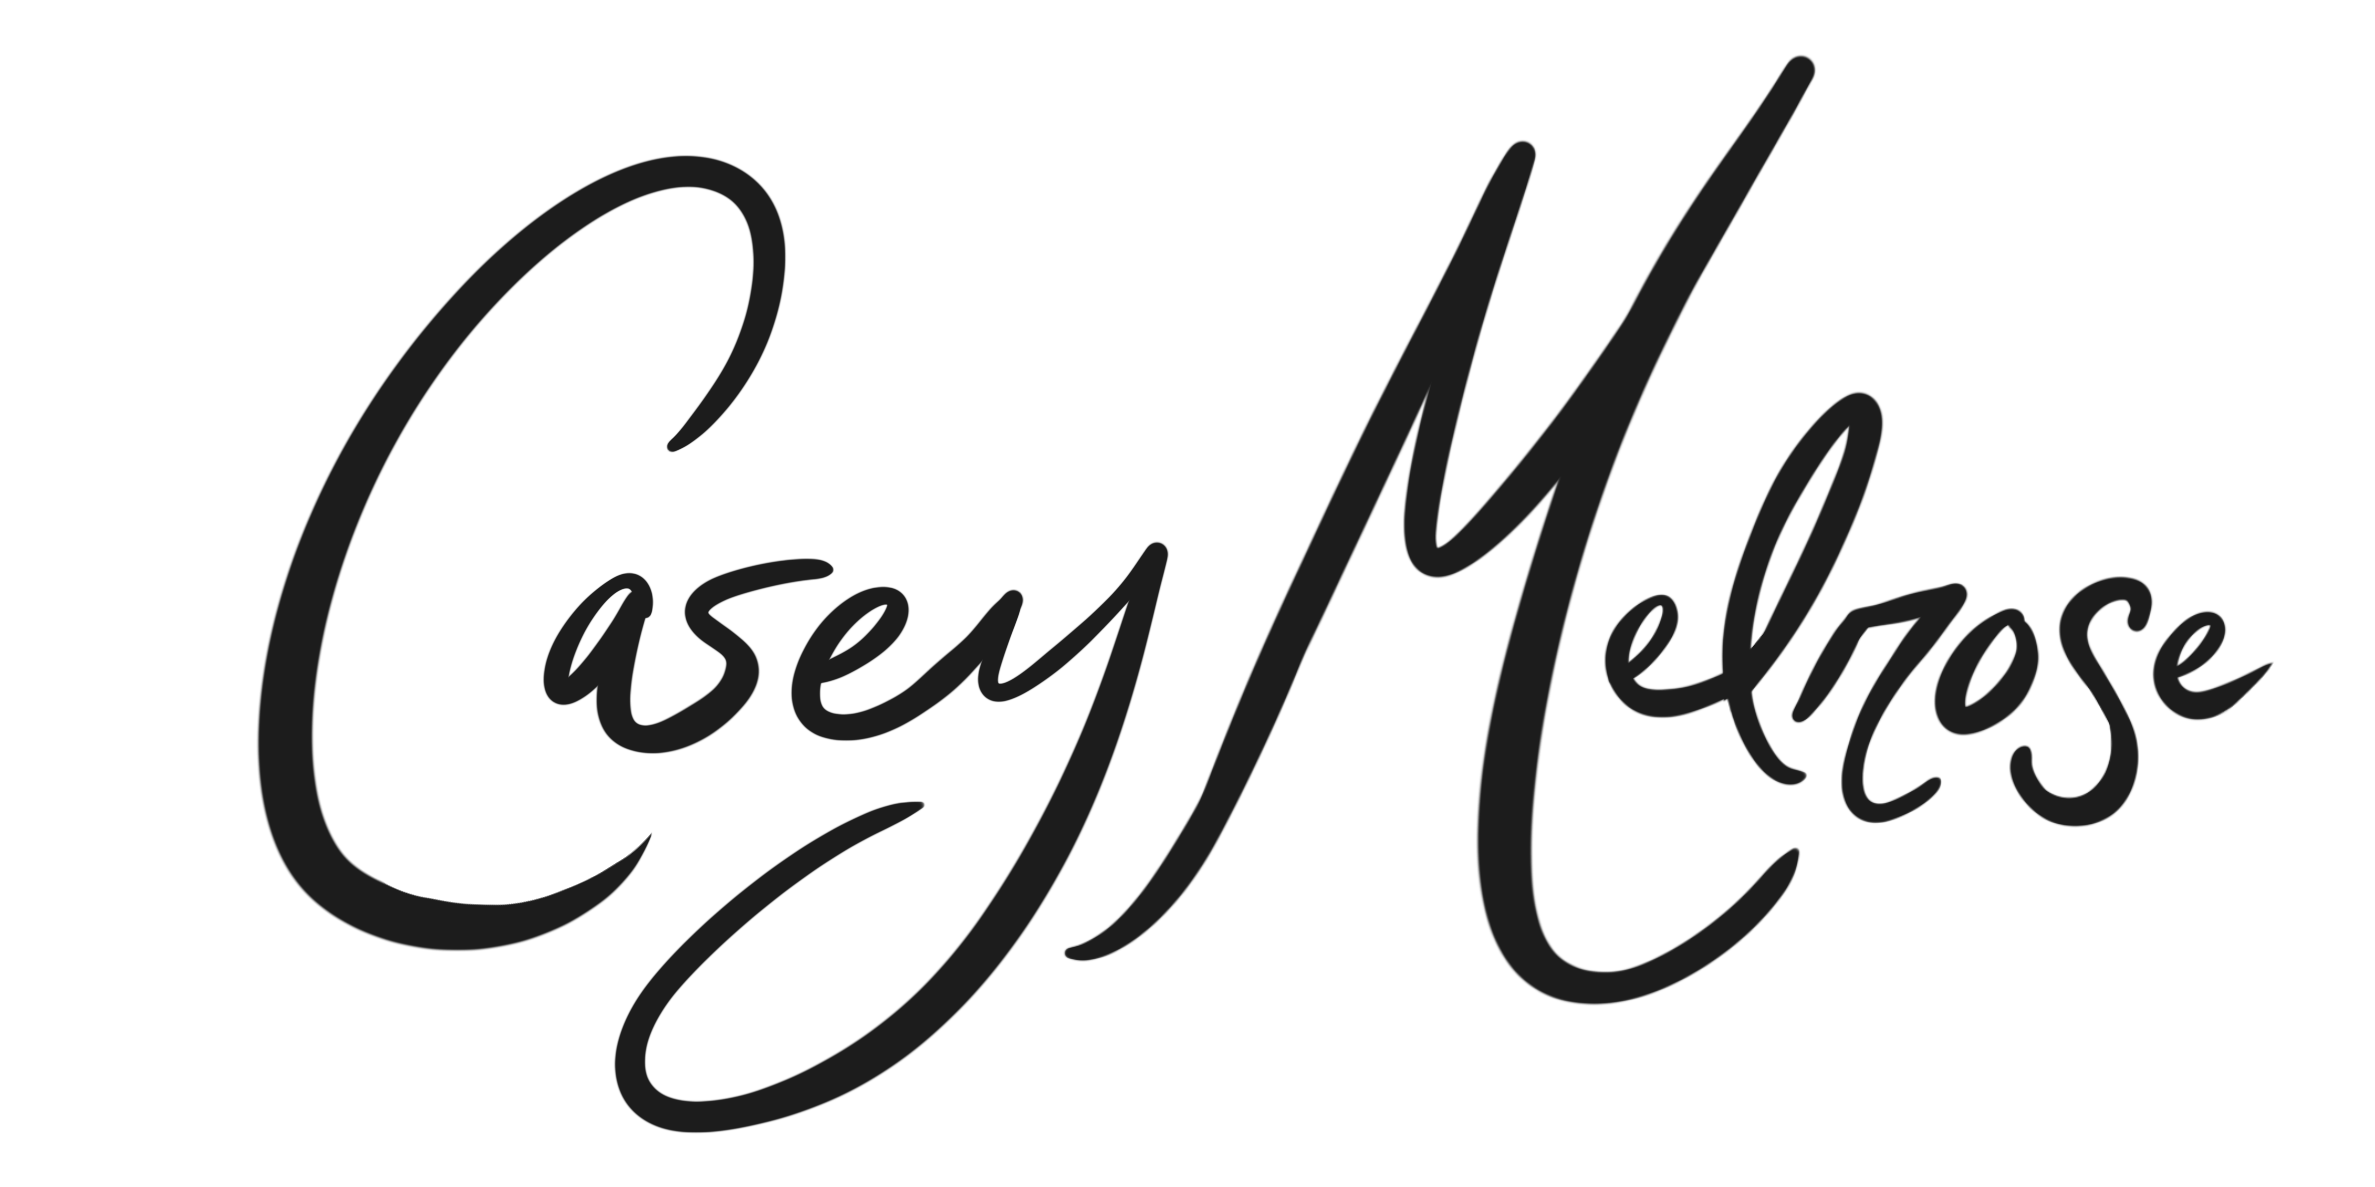 Casey Melrose